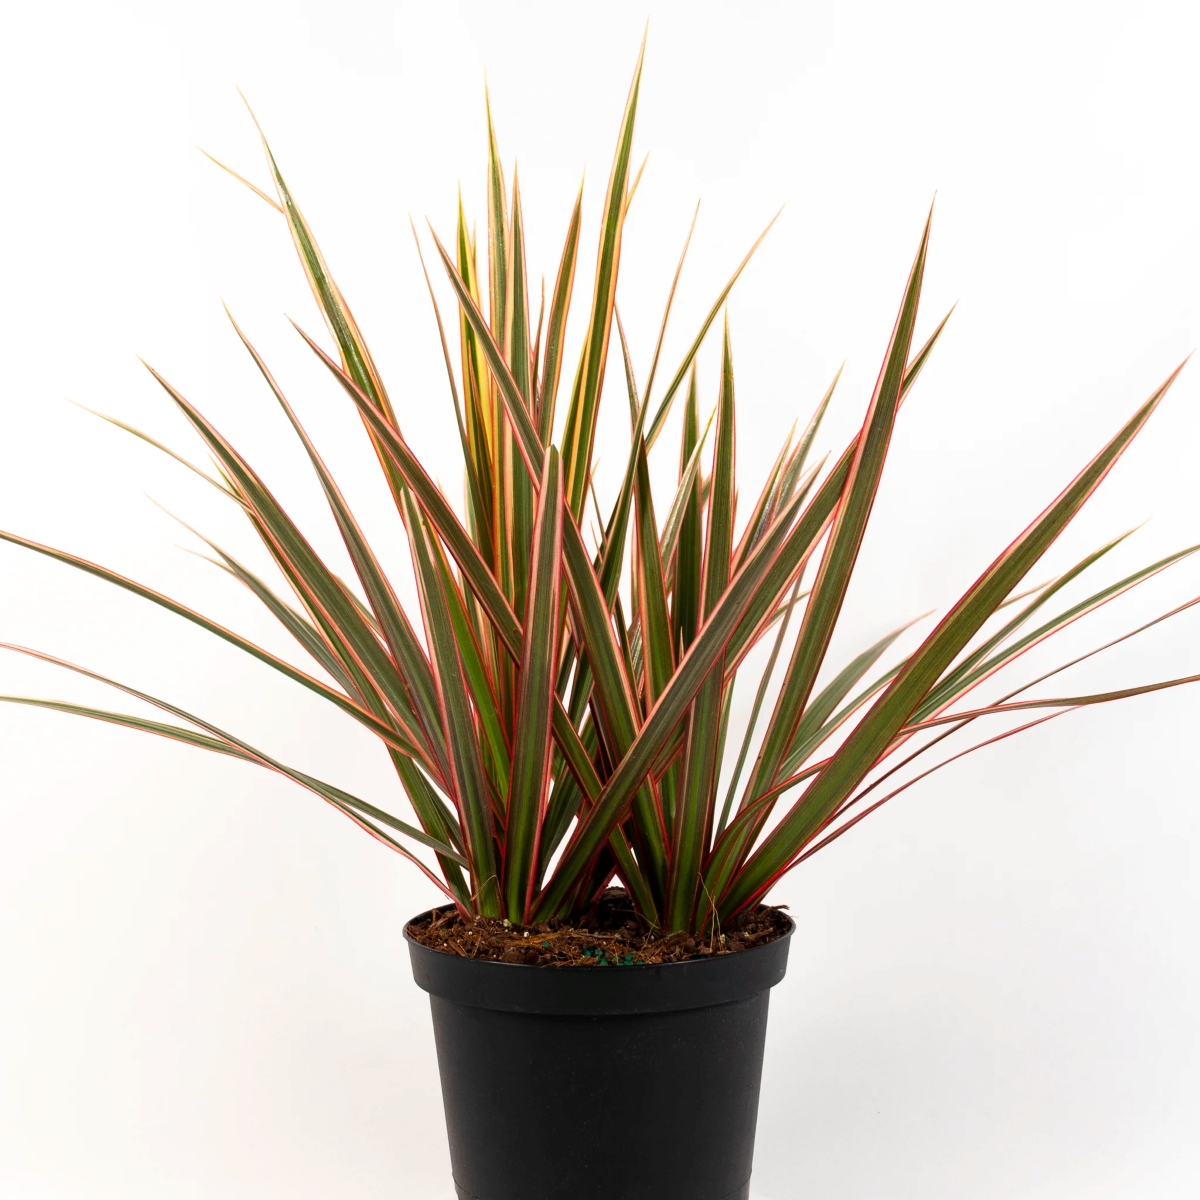 Tricolor dracaena plant in pot